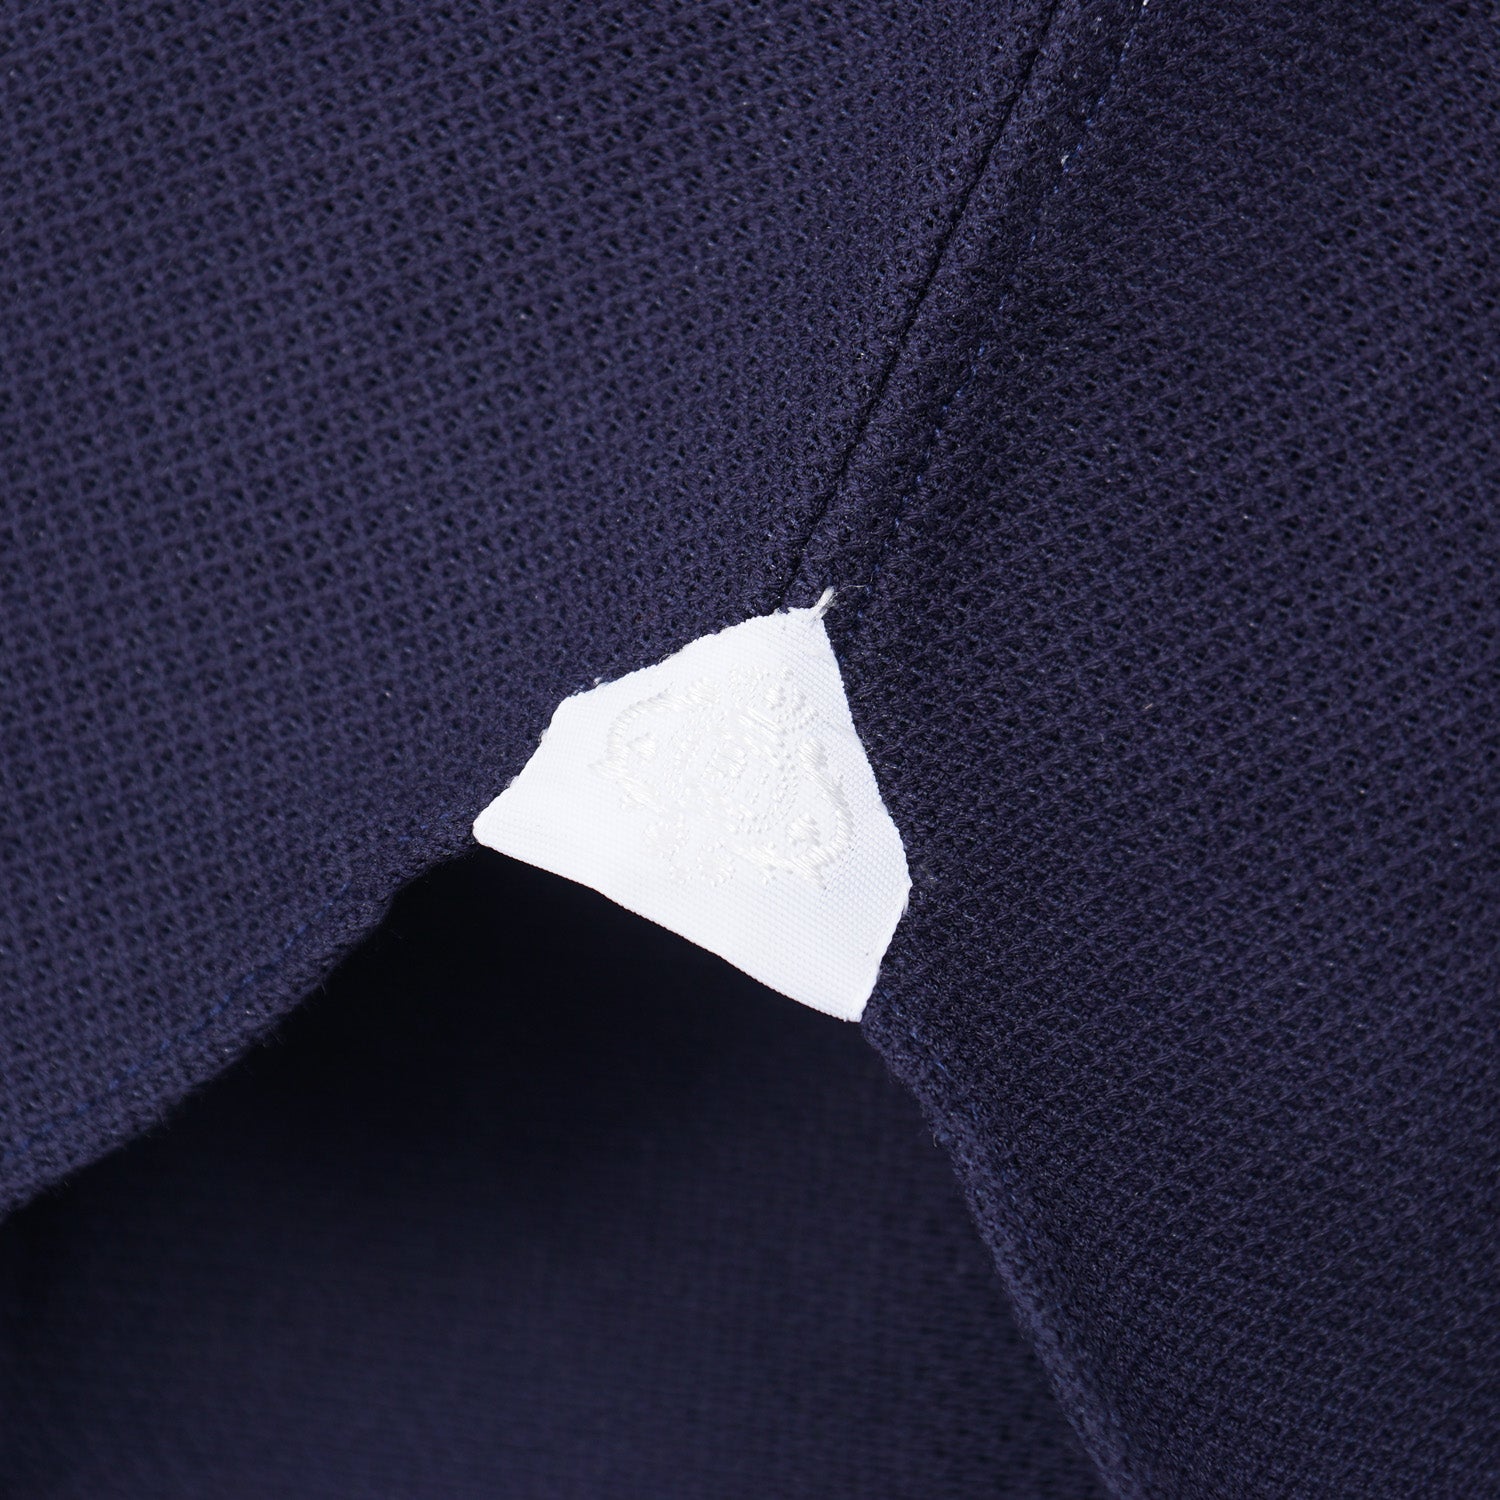 Luigi Borrelli Pique Knit Cotton Shirt - Top Shelf Apparel